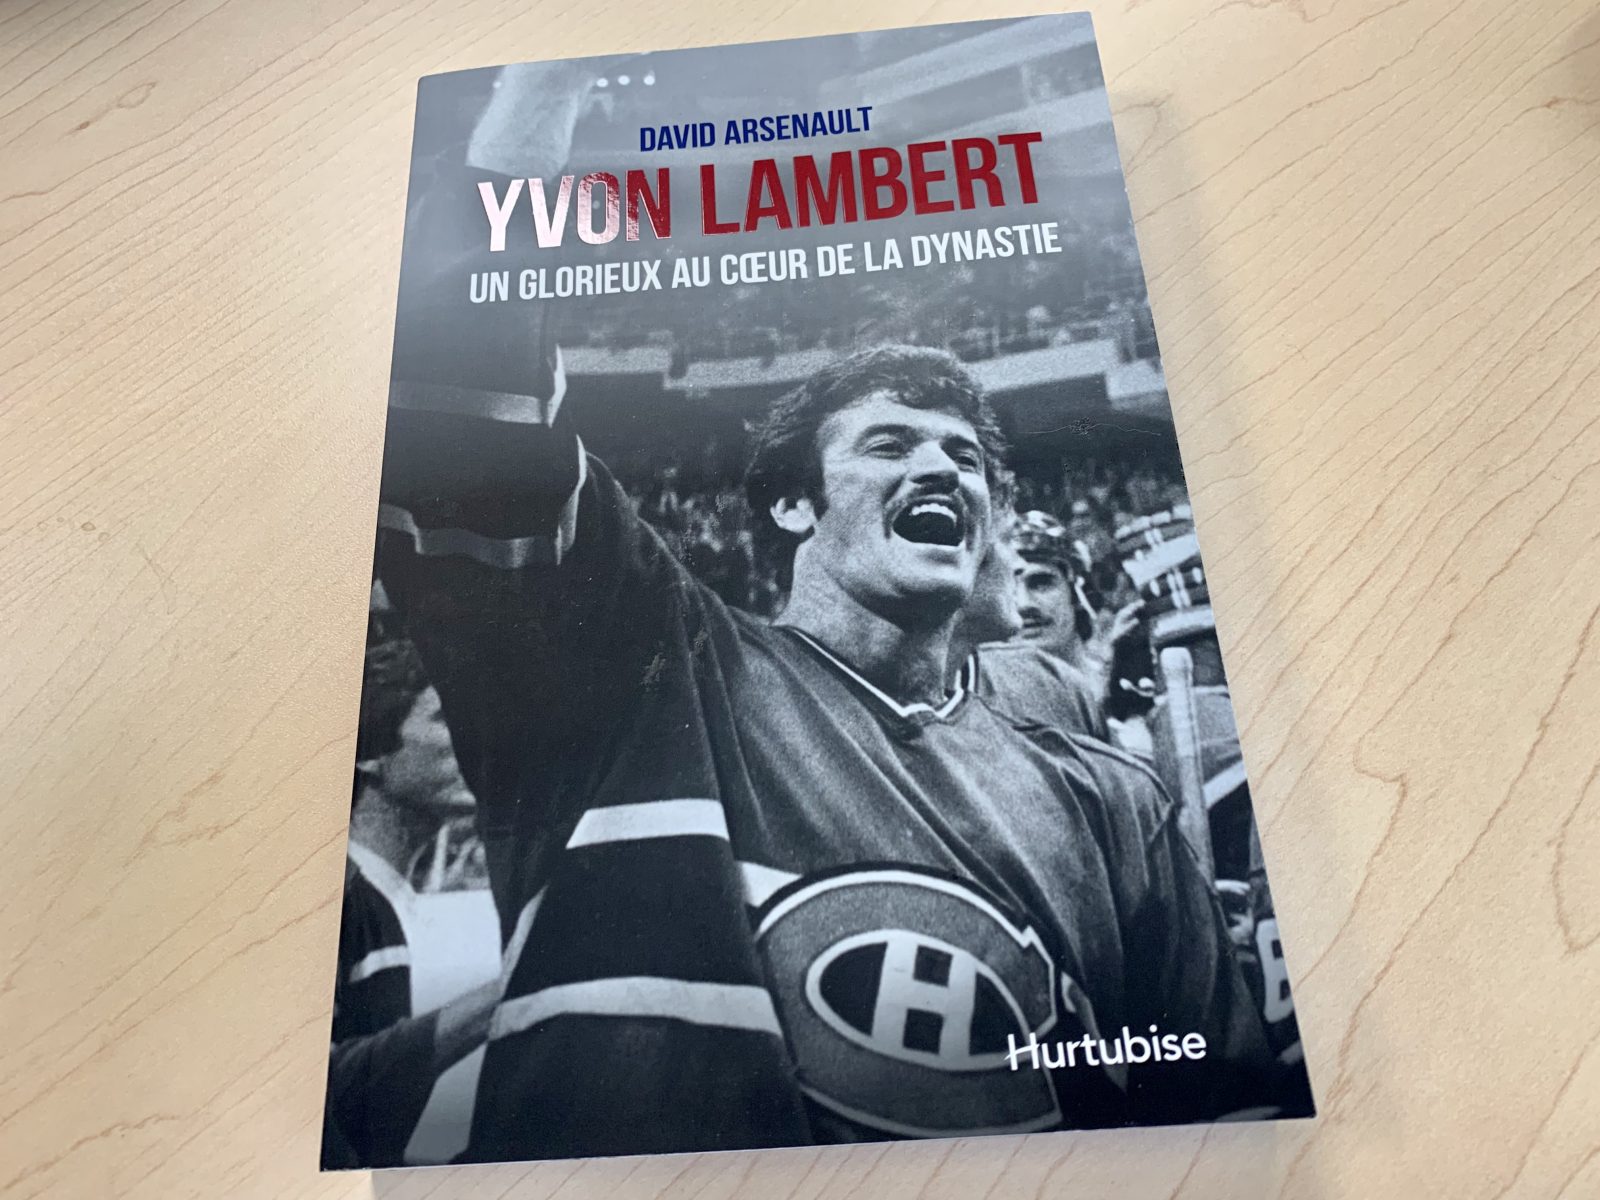 L’ex-hockeyeur Yvon Lambert sera à Saint-Germain ce samedi